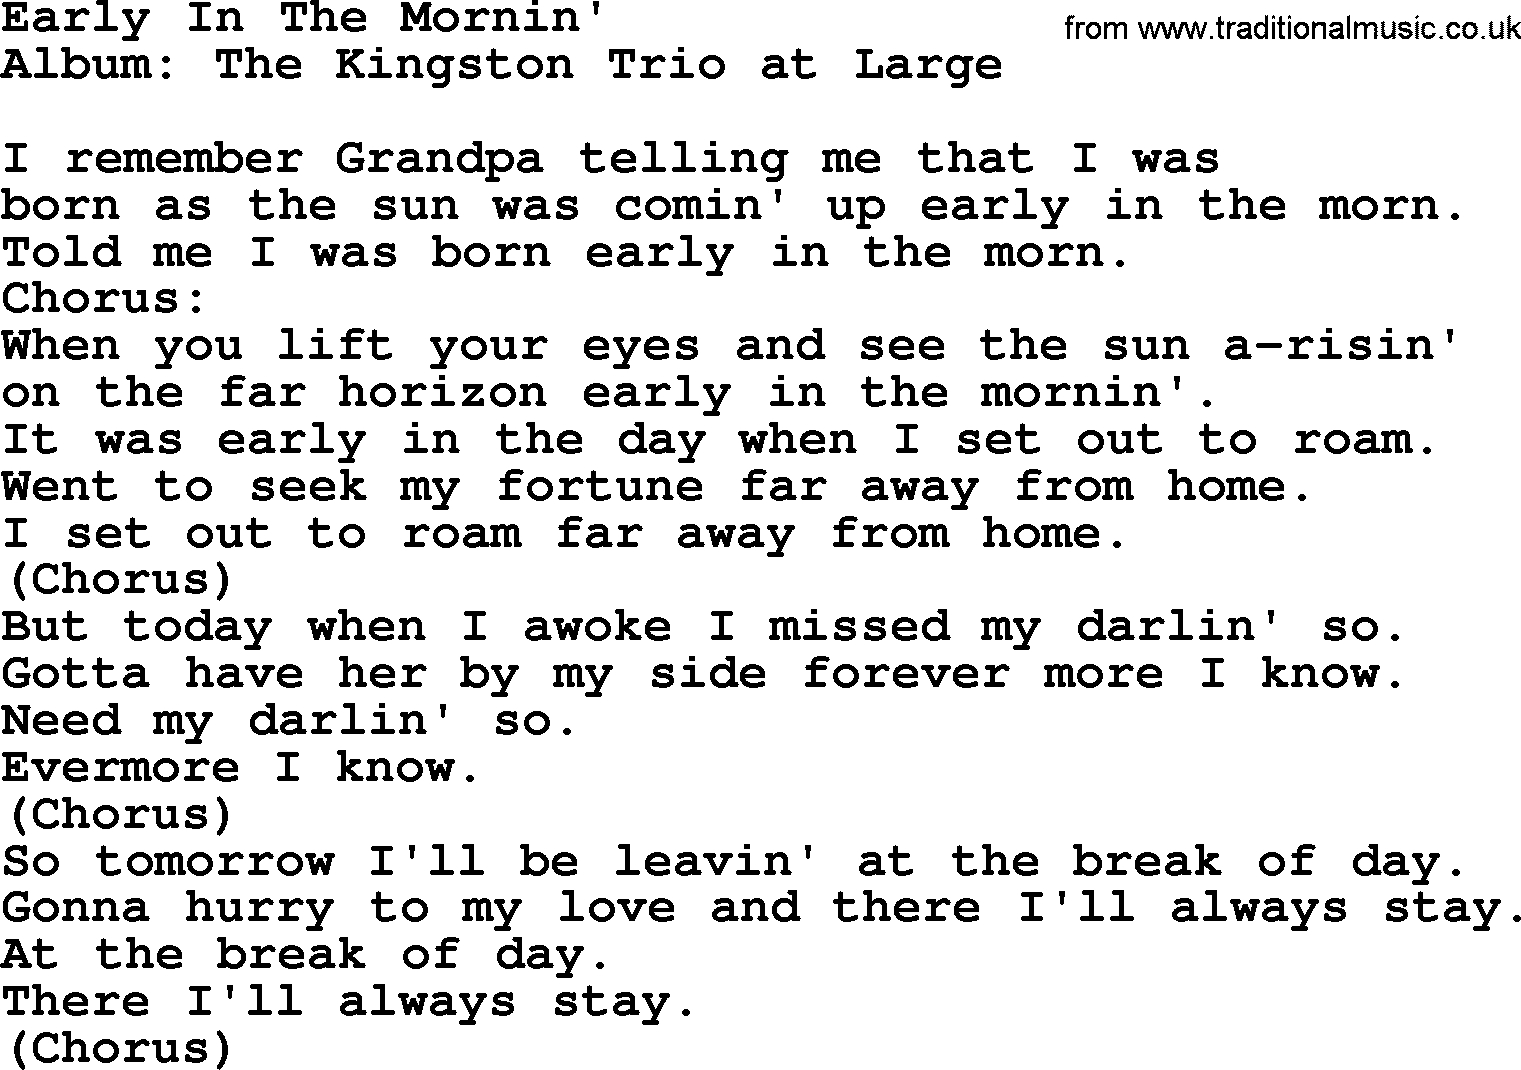 Kingston Trio song Early In The Mornin', lyrics